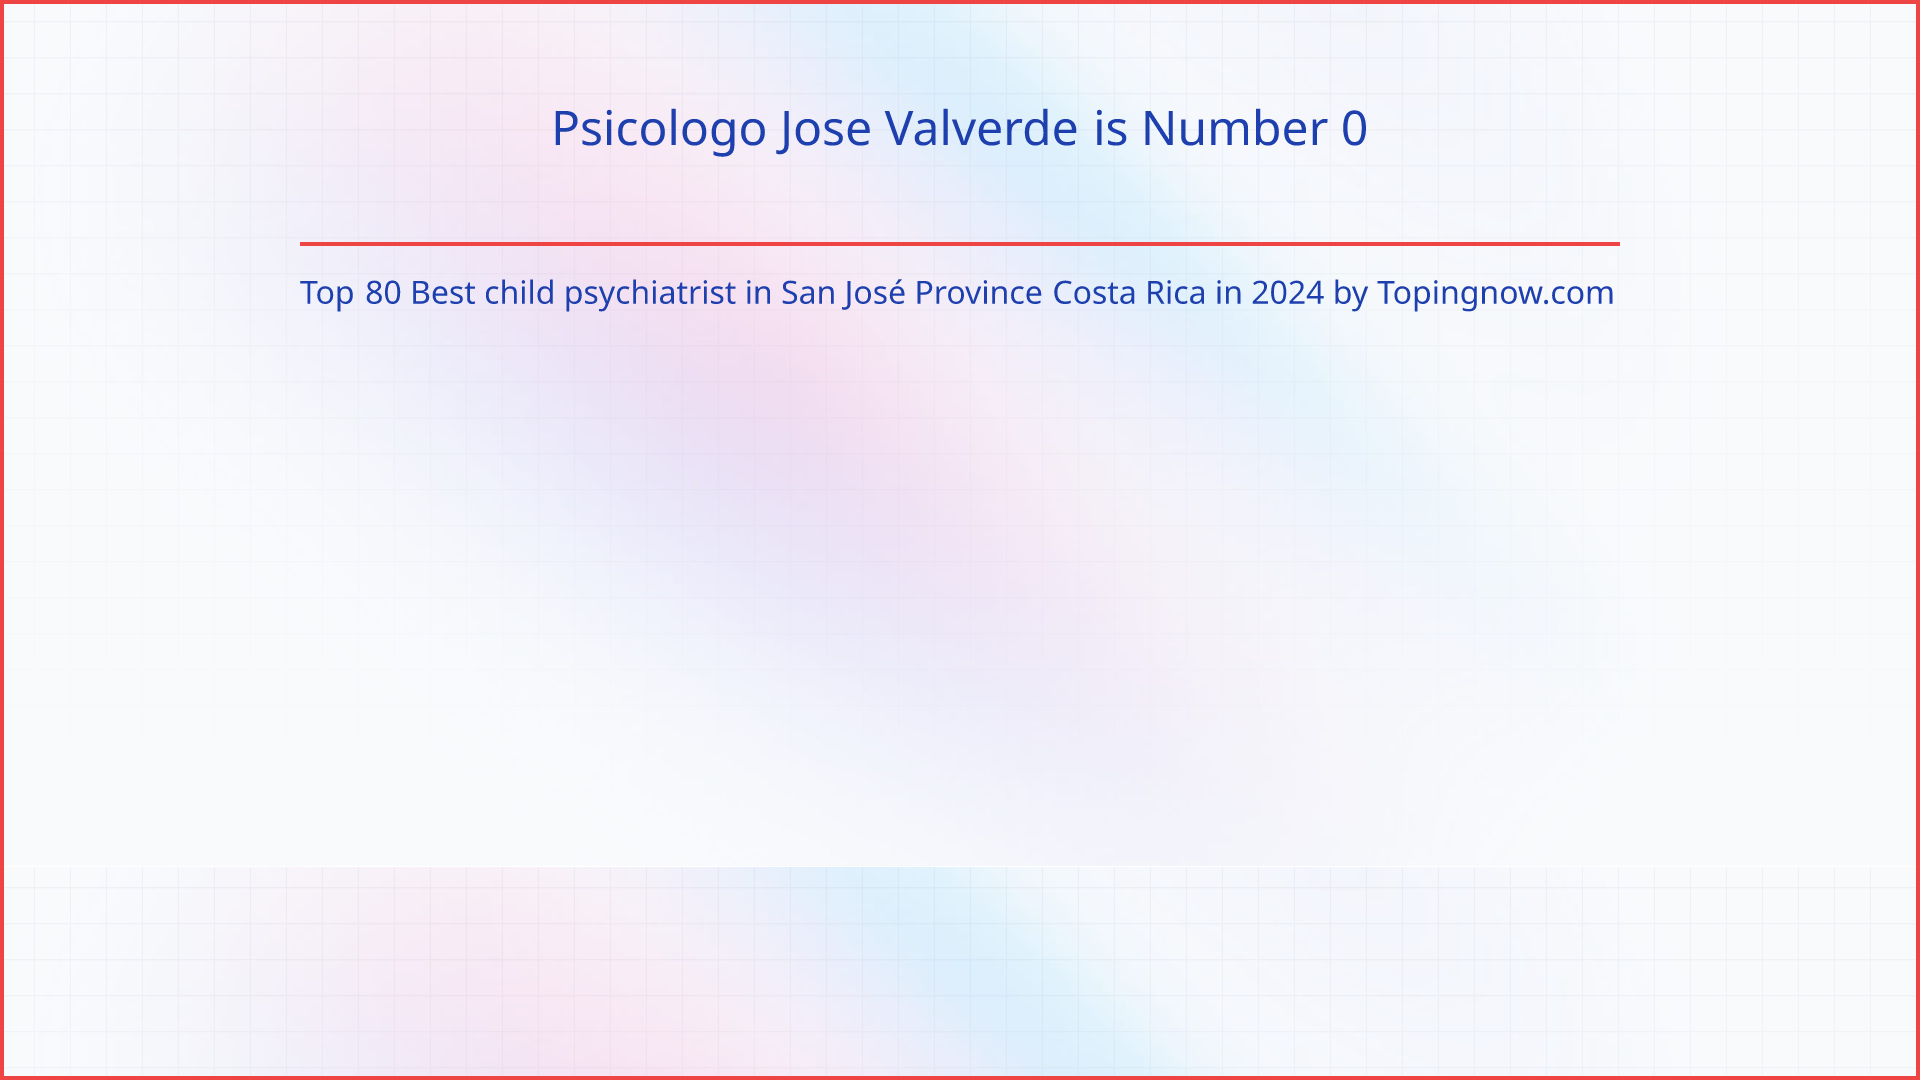 Psicologo Jose Valverde: Top 80 Best child psychiatrist in San José Province Costa Rica in 2024